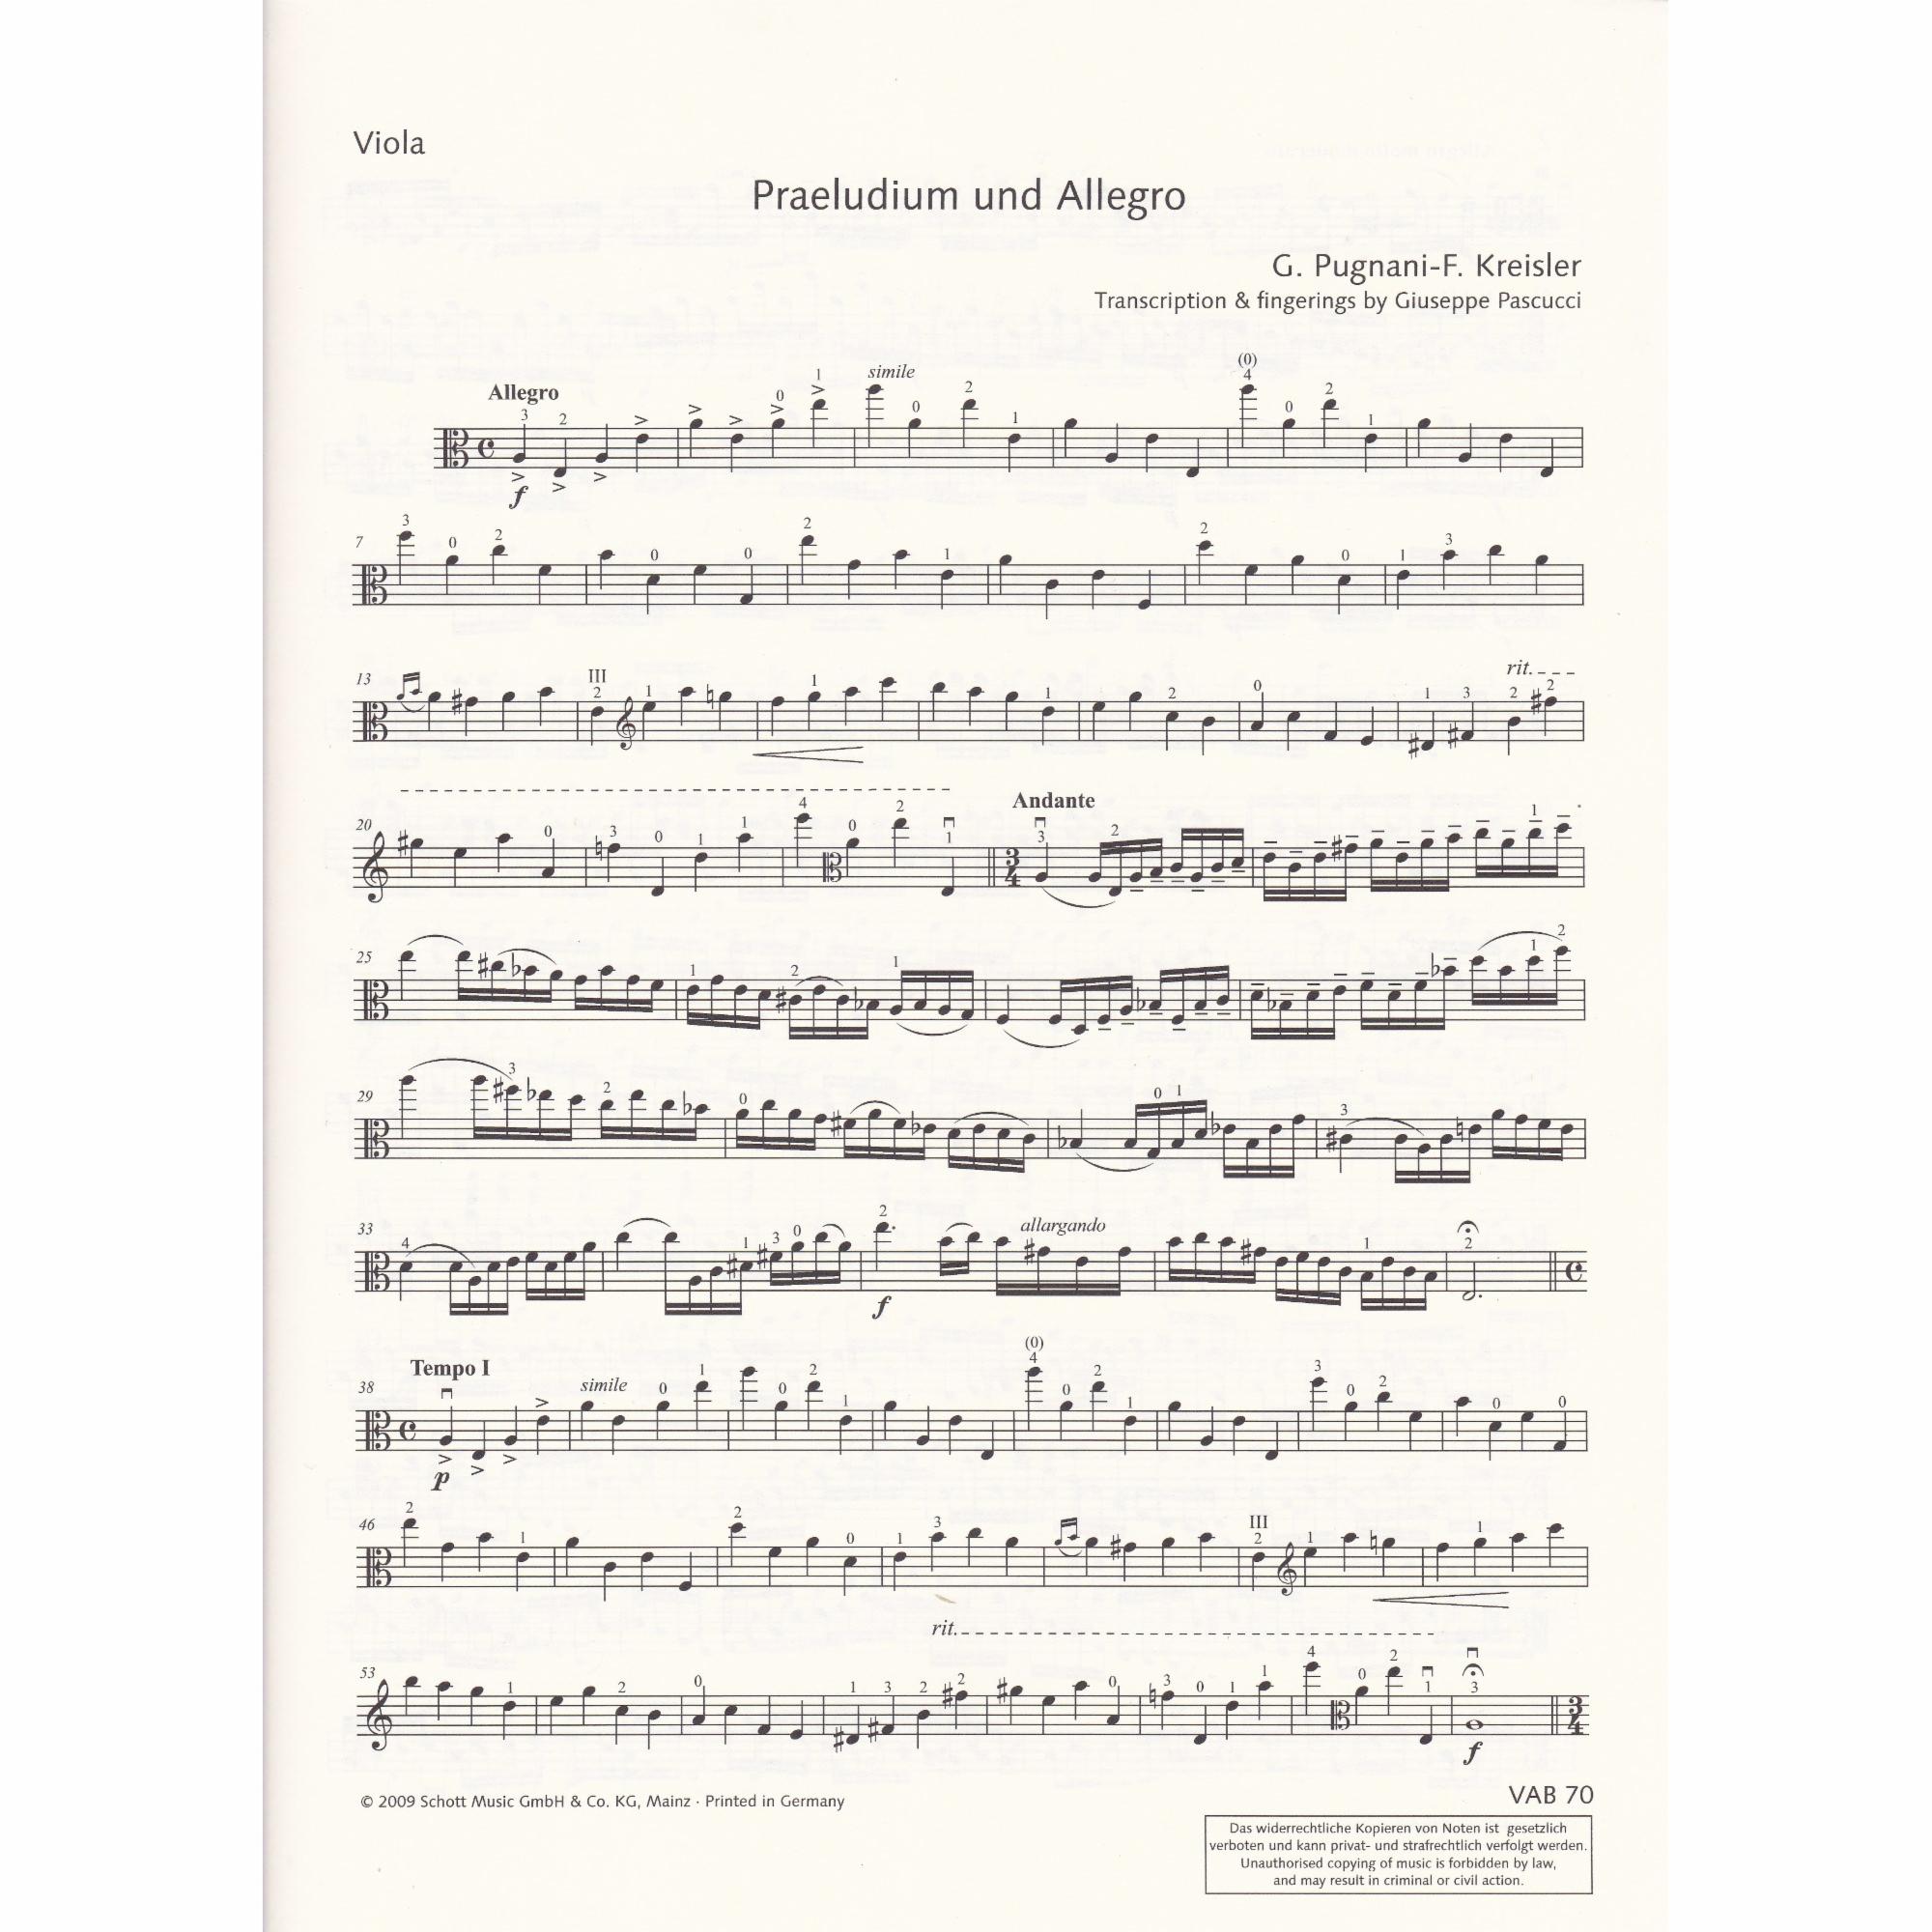 Praeludium and Allegro for Viola and Piano